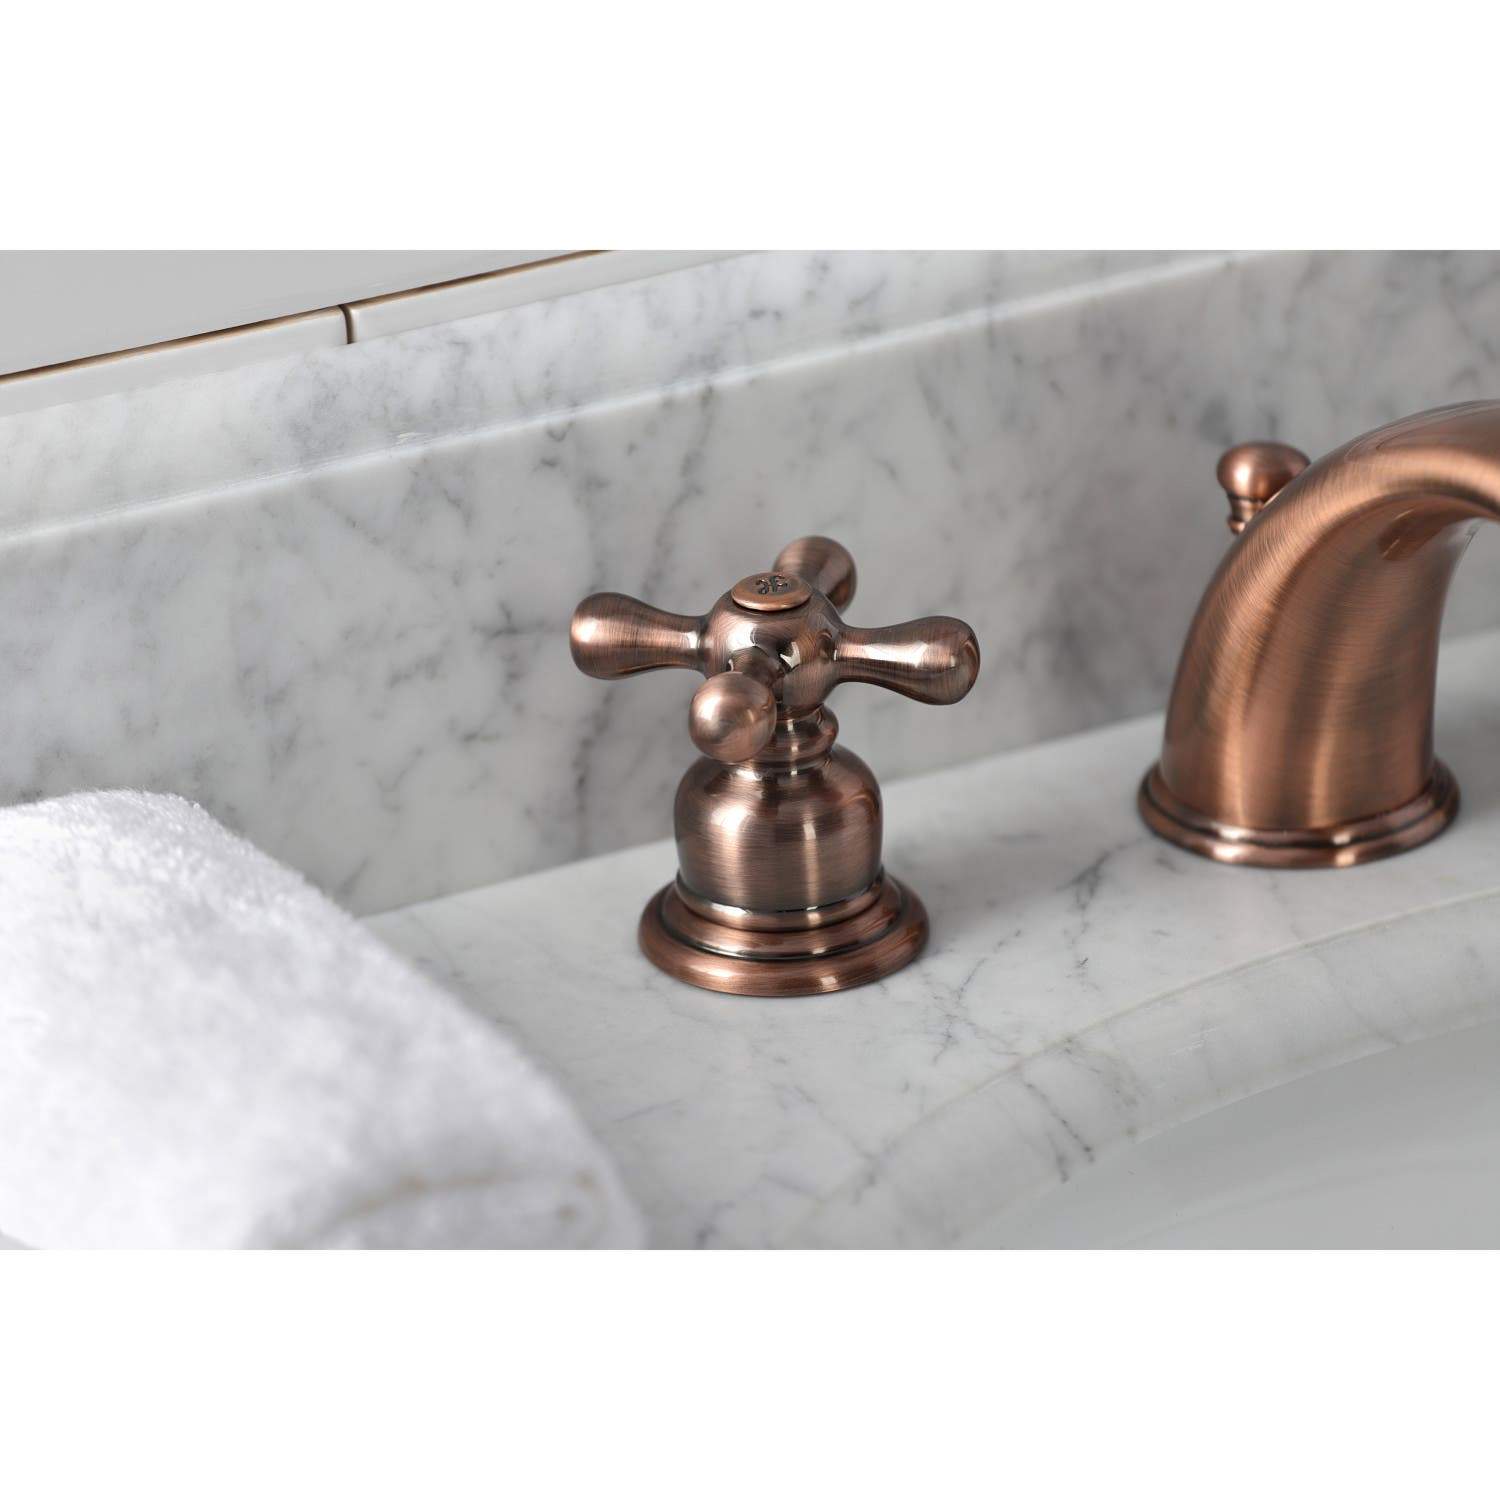 Kingston Brass KB966AX Victorian Widespread Bathroom Faucet, Antique Copper